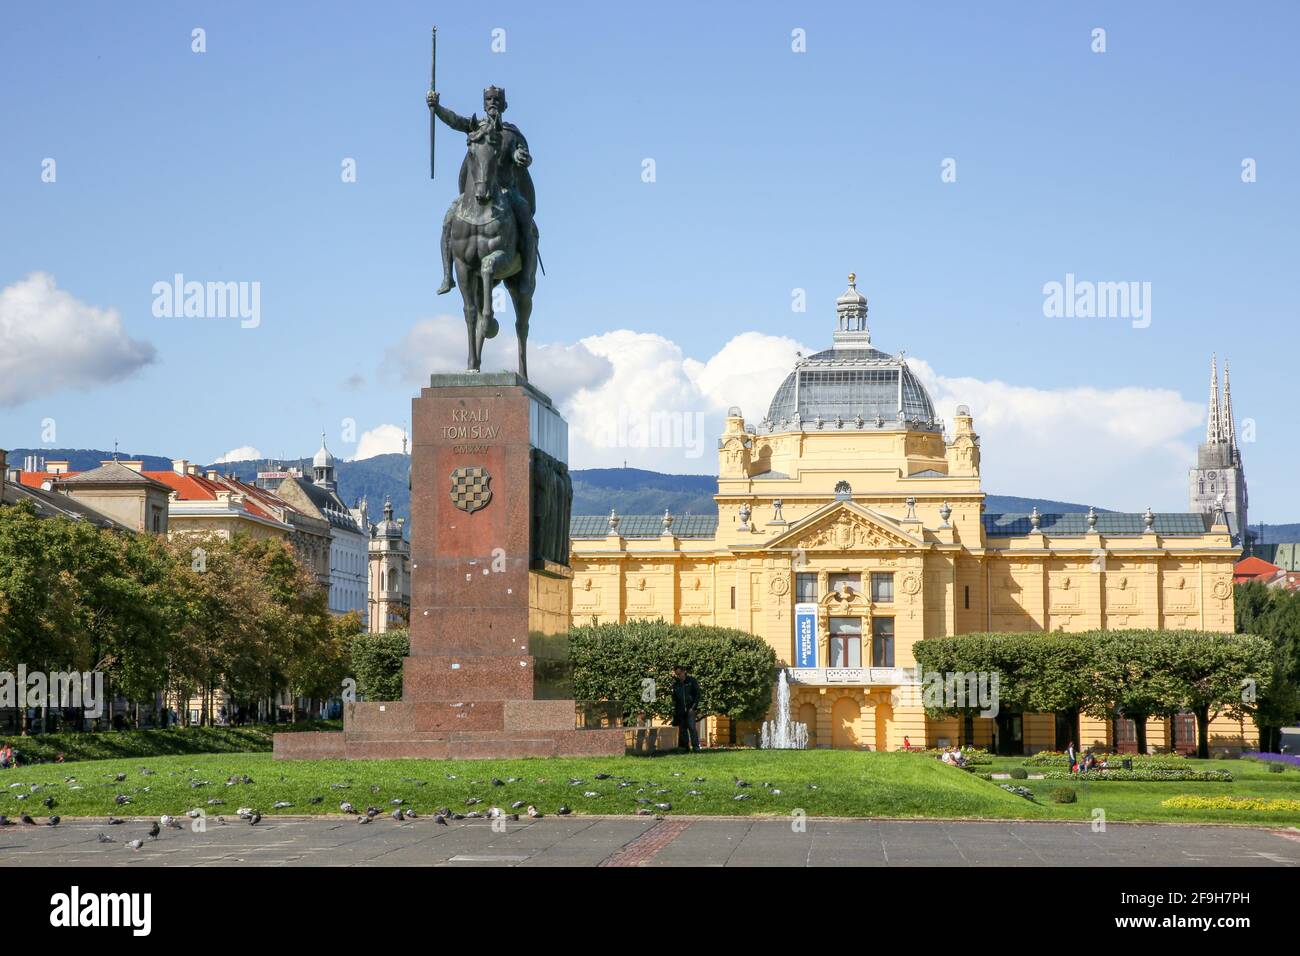 Marshal Tito Square & Croation National Theatre, Zagreb, Croatia Stock Photo